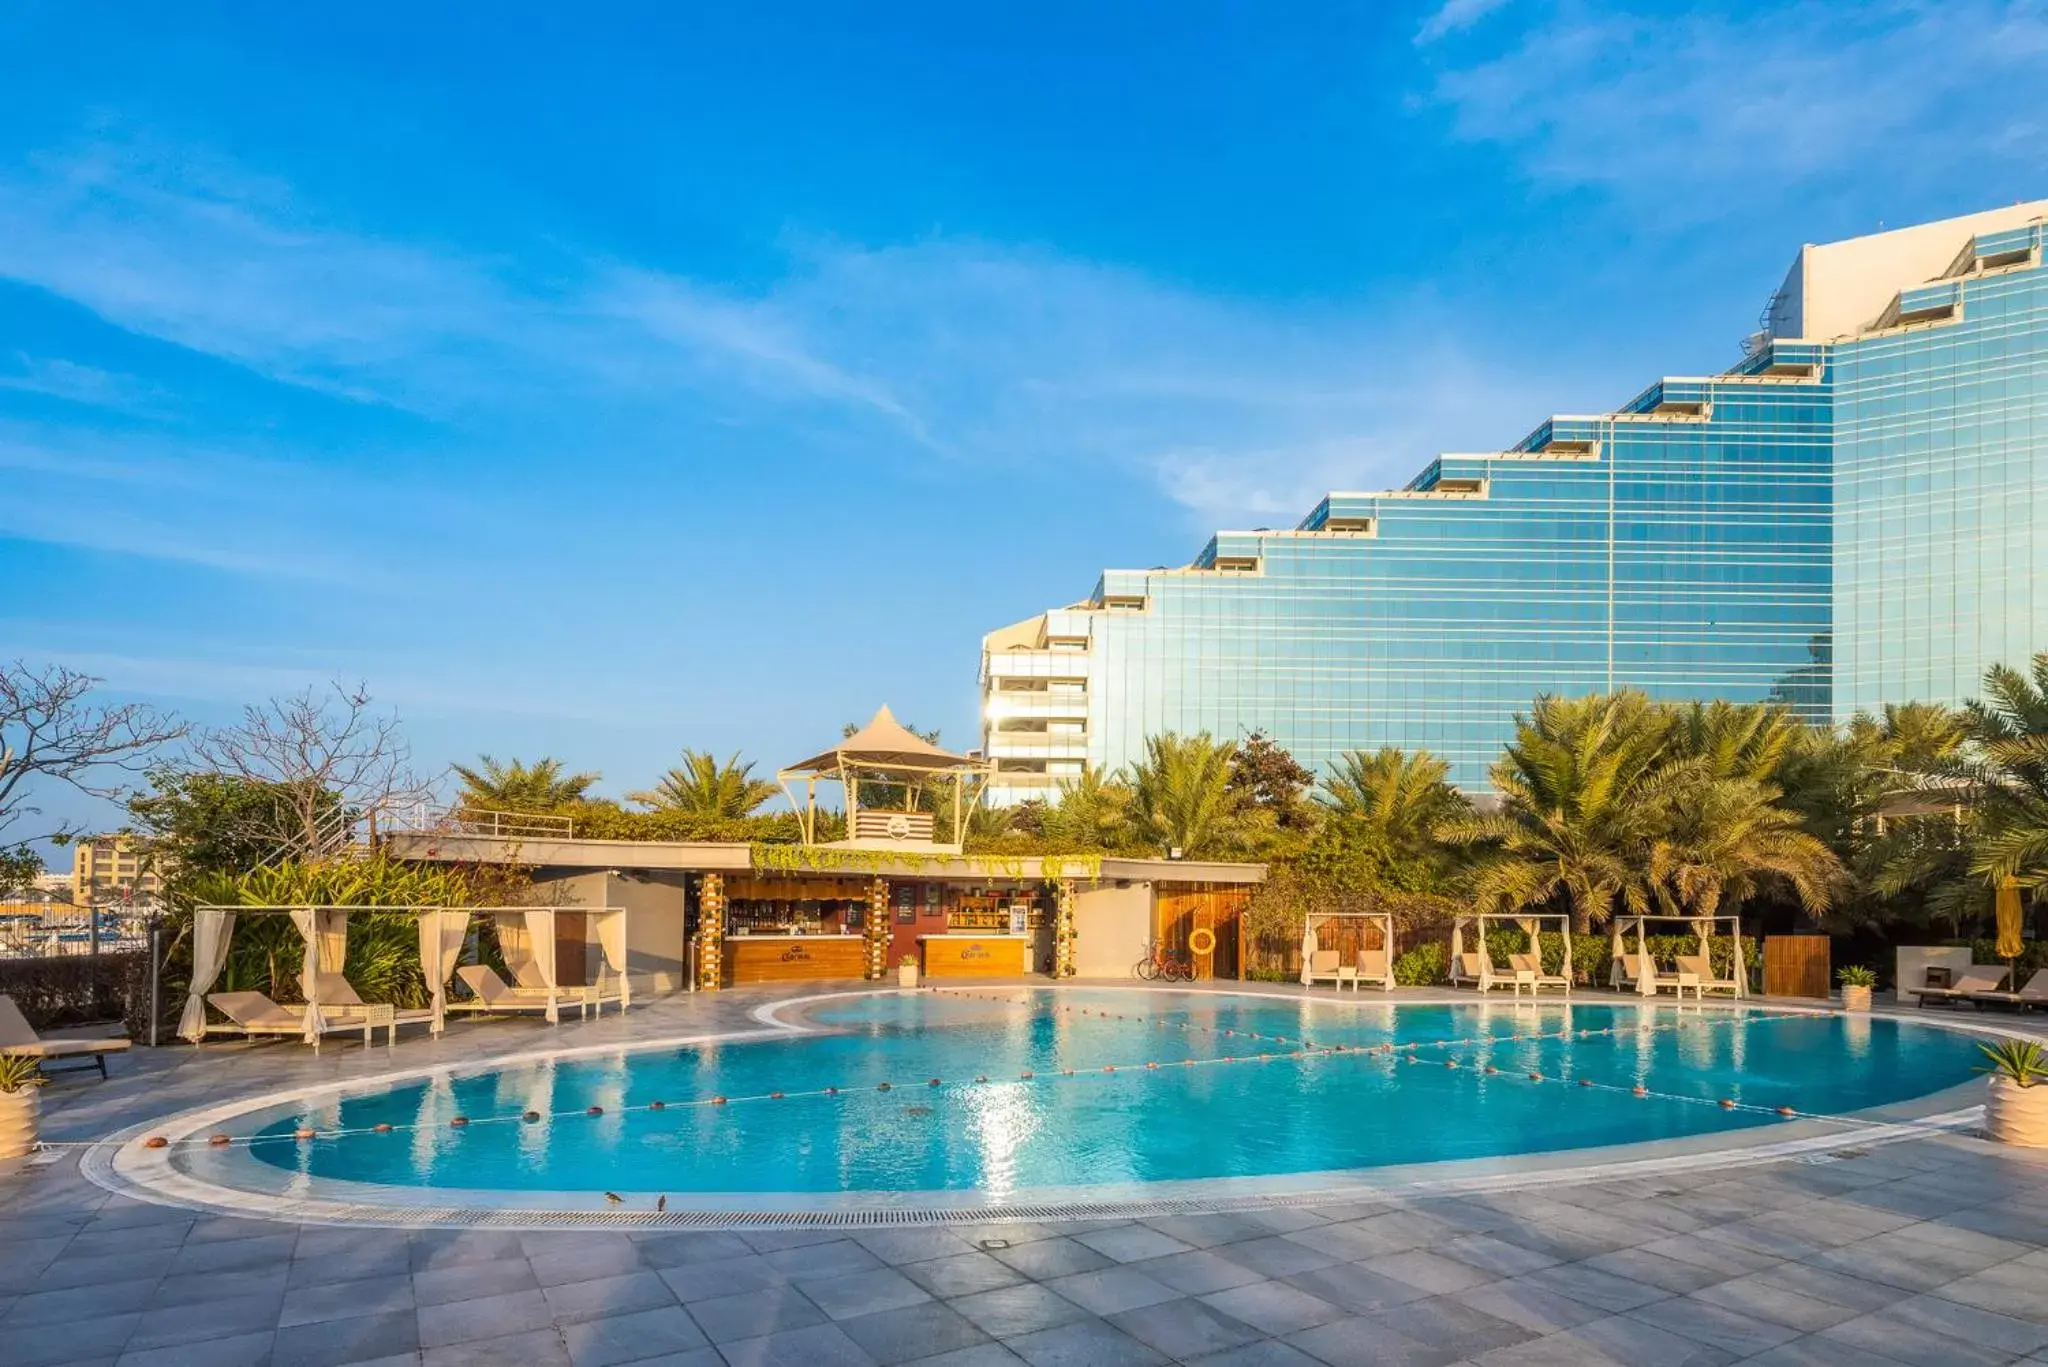 Swimming Pool in The Art Hotel & Resort